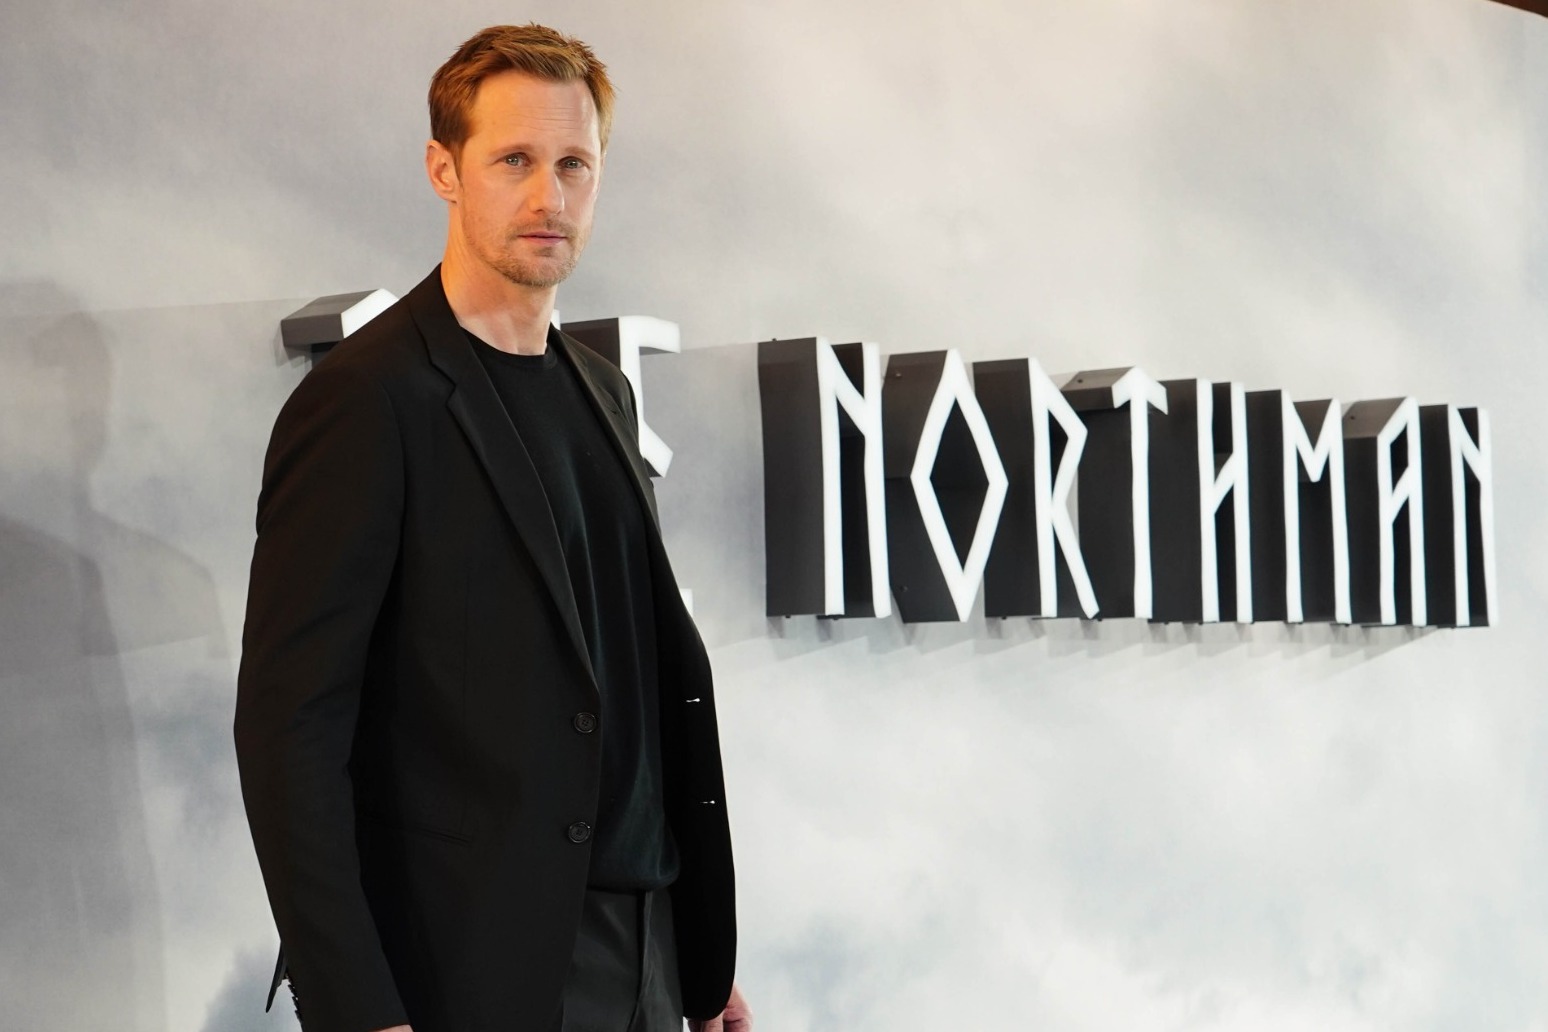 Alexander Skarsgard A treat to reunite with Nicole Kidman for The Northman